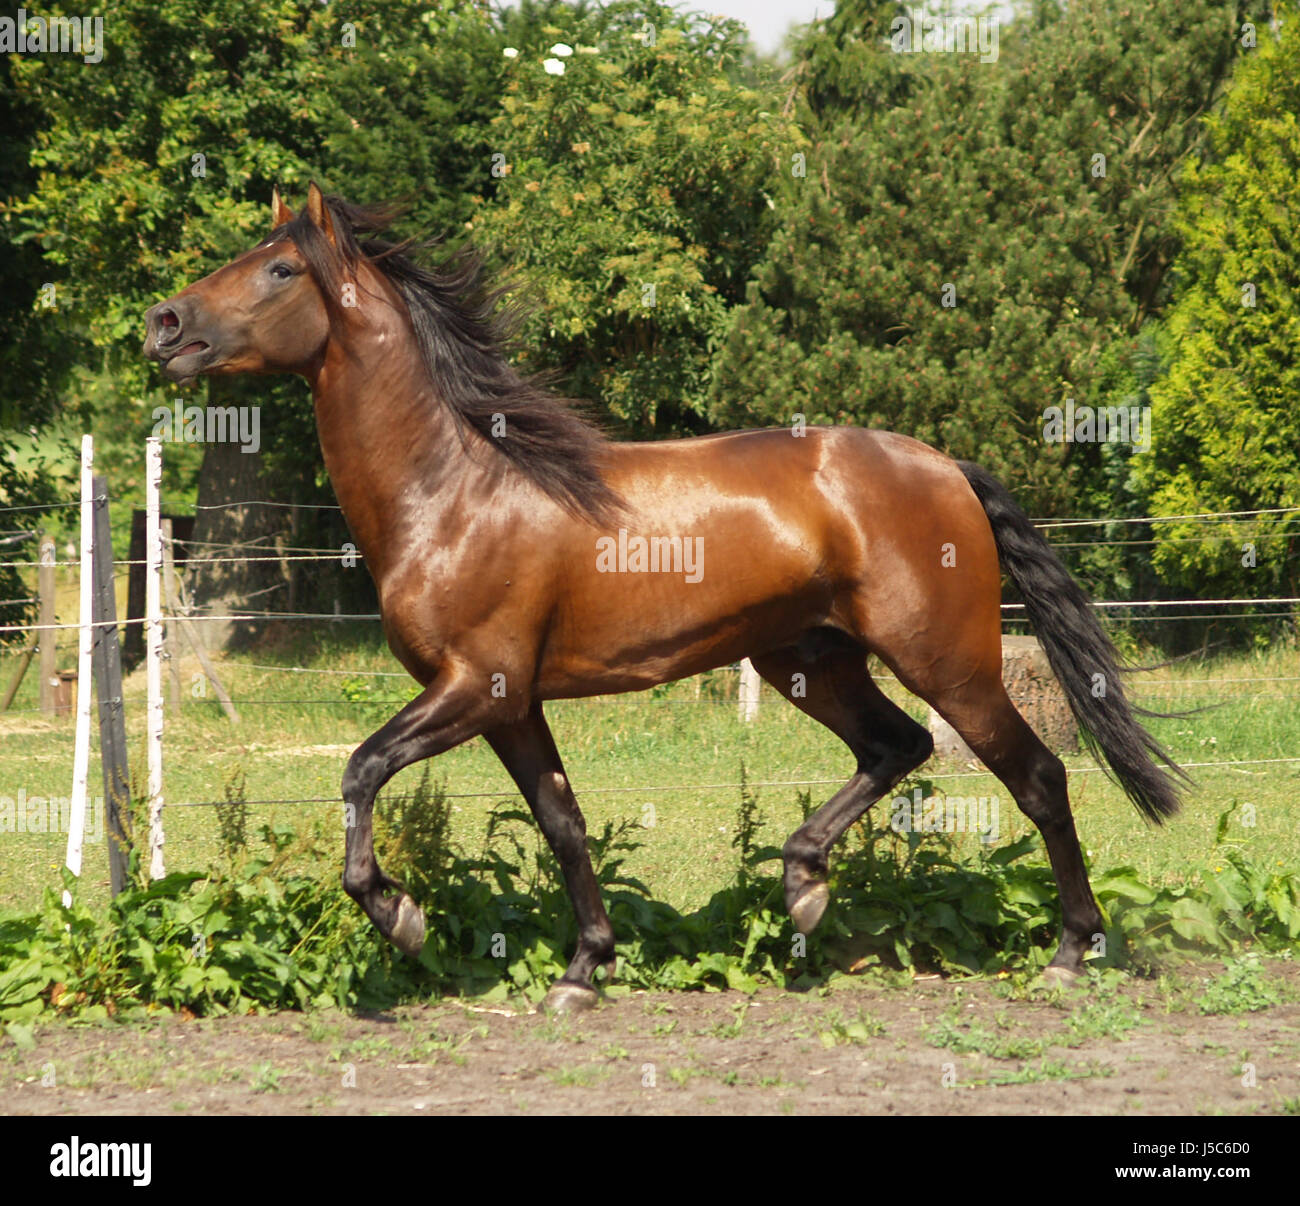 neighing stallion trotting Stock Photo